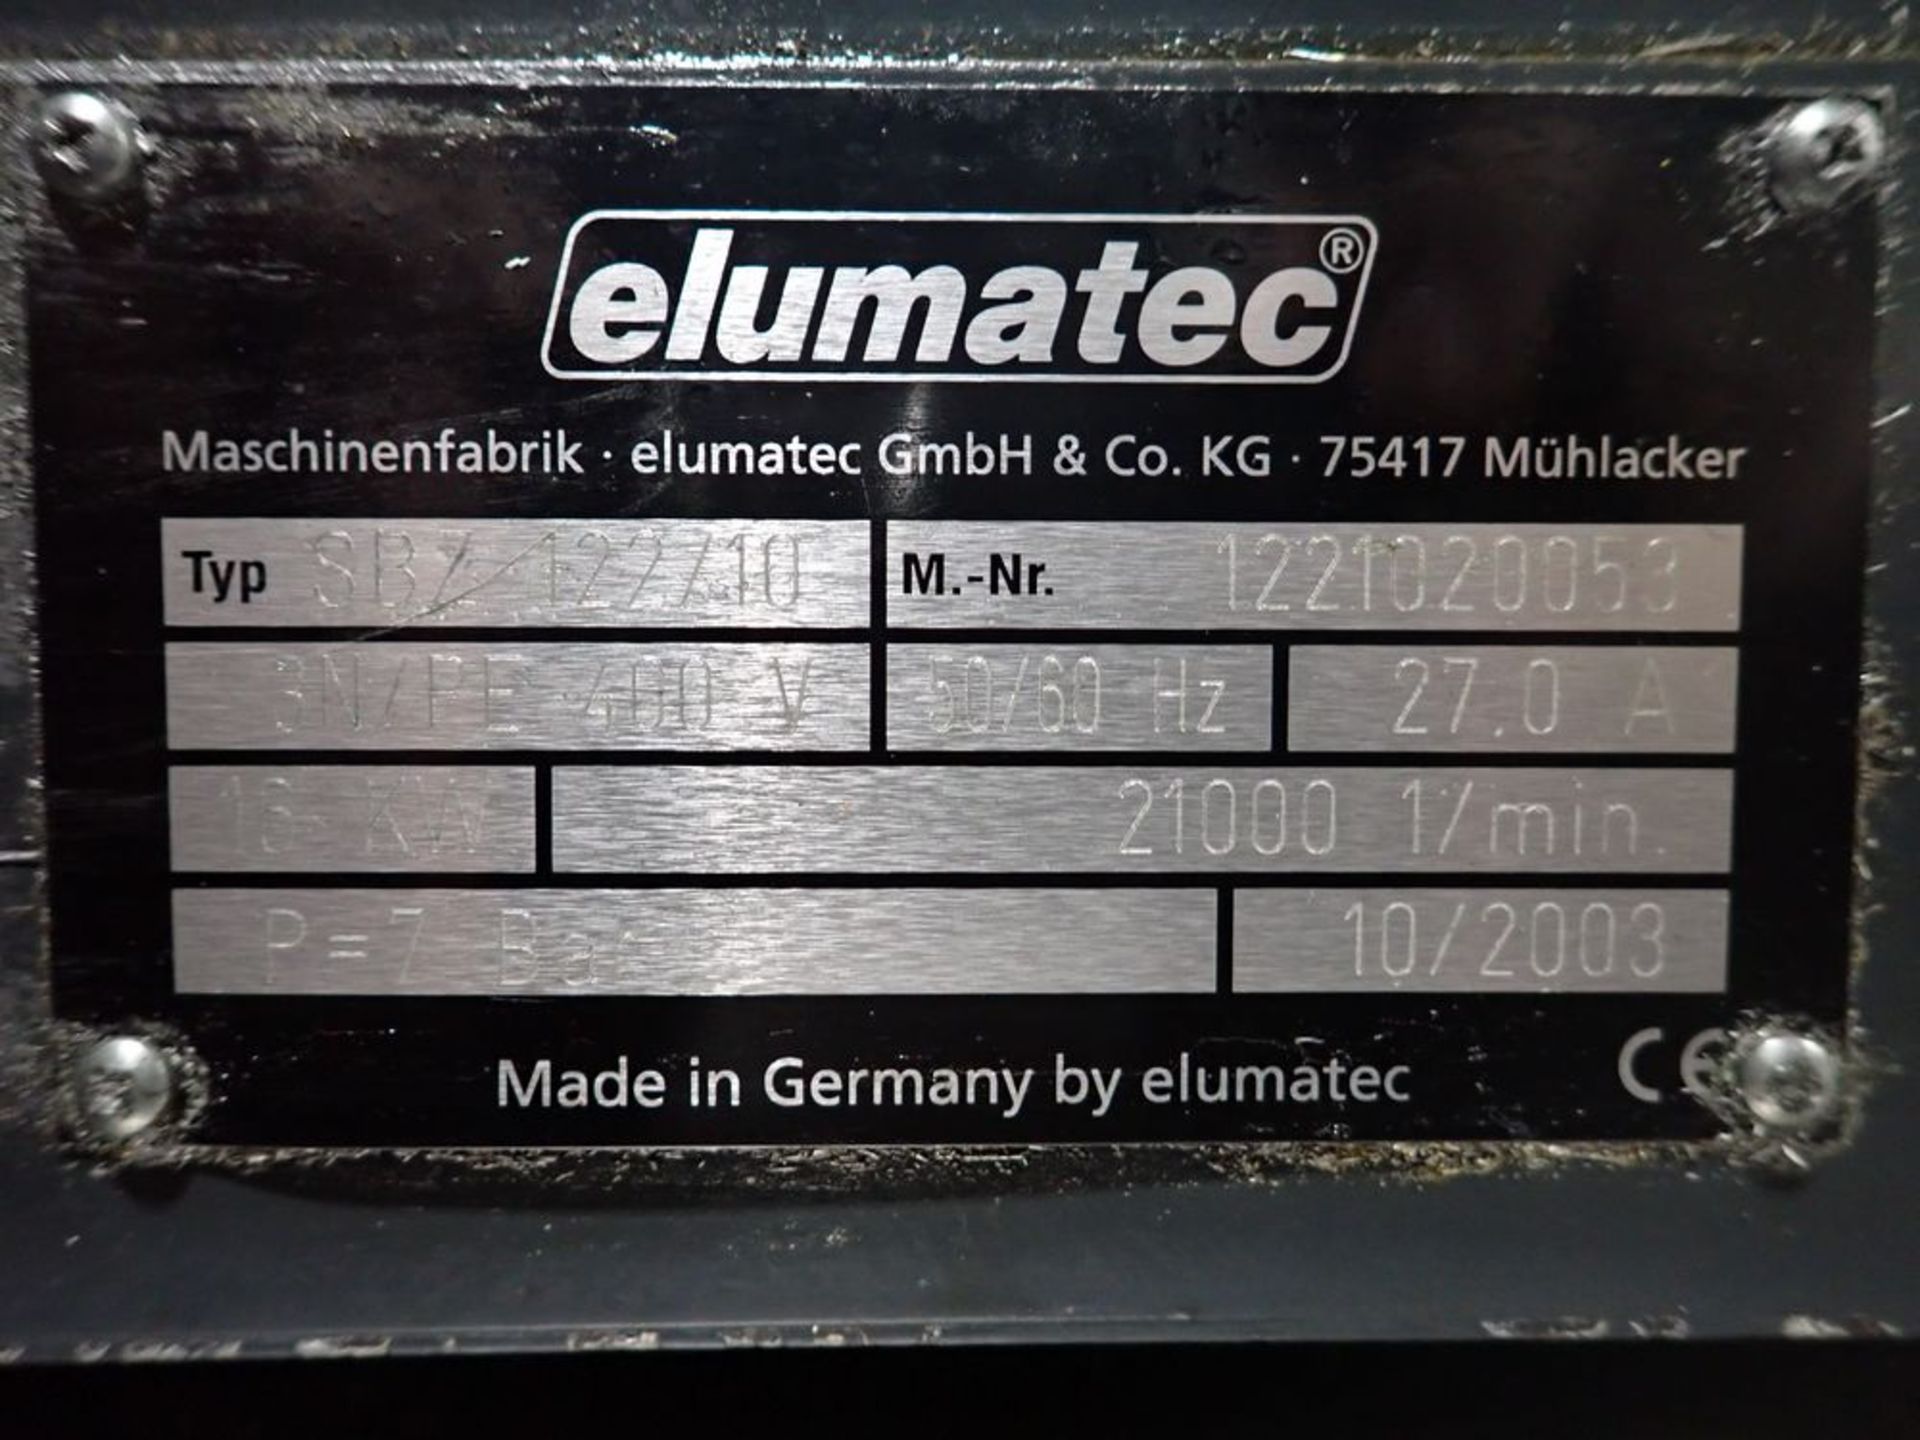 ELUMATEC SBZ-122/10 CNC PROFILE MACHINING CENTER/ROUTER, S/N 1221020053, NEW 2003 - Image 12 of 13